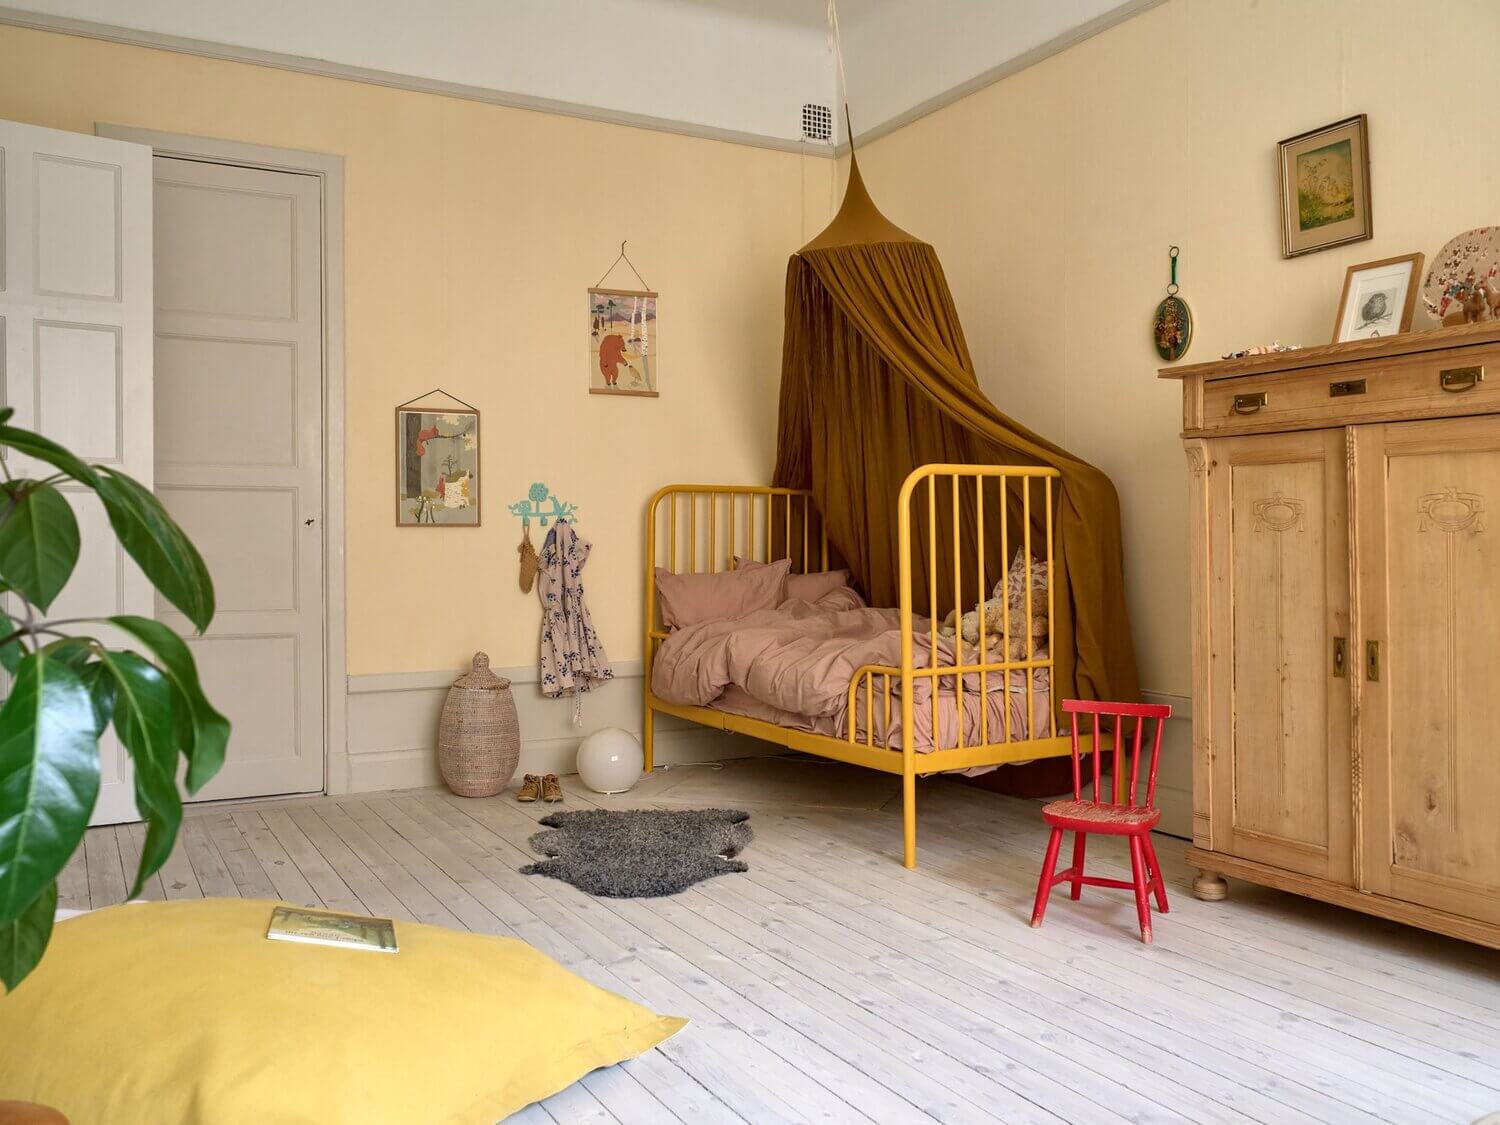 AScandinavianApartmentPaintedInSoftColorTones TheNordroom25 A Scandinavian Apartment Painted In Pastel Color Tones